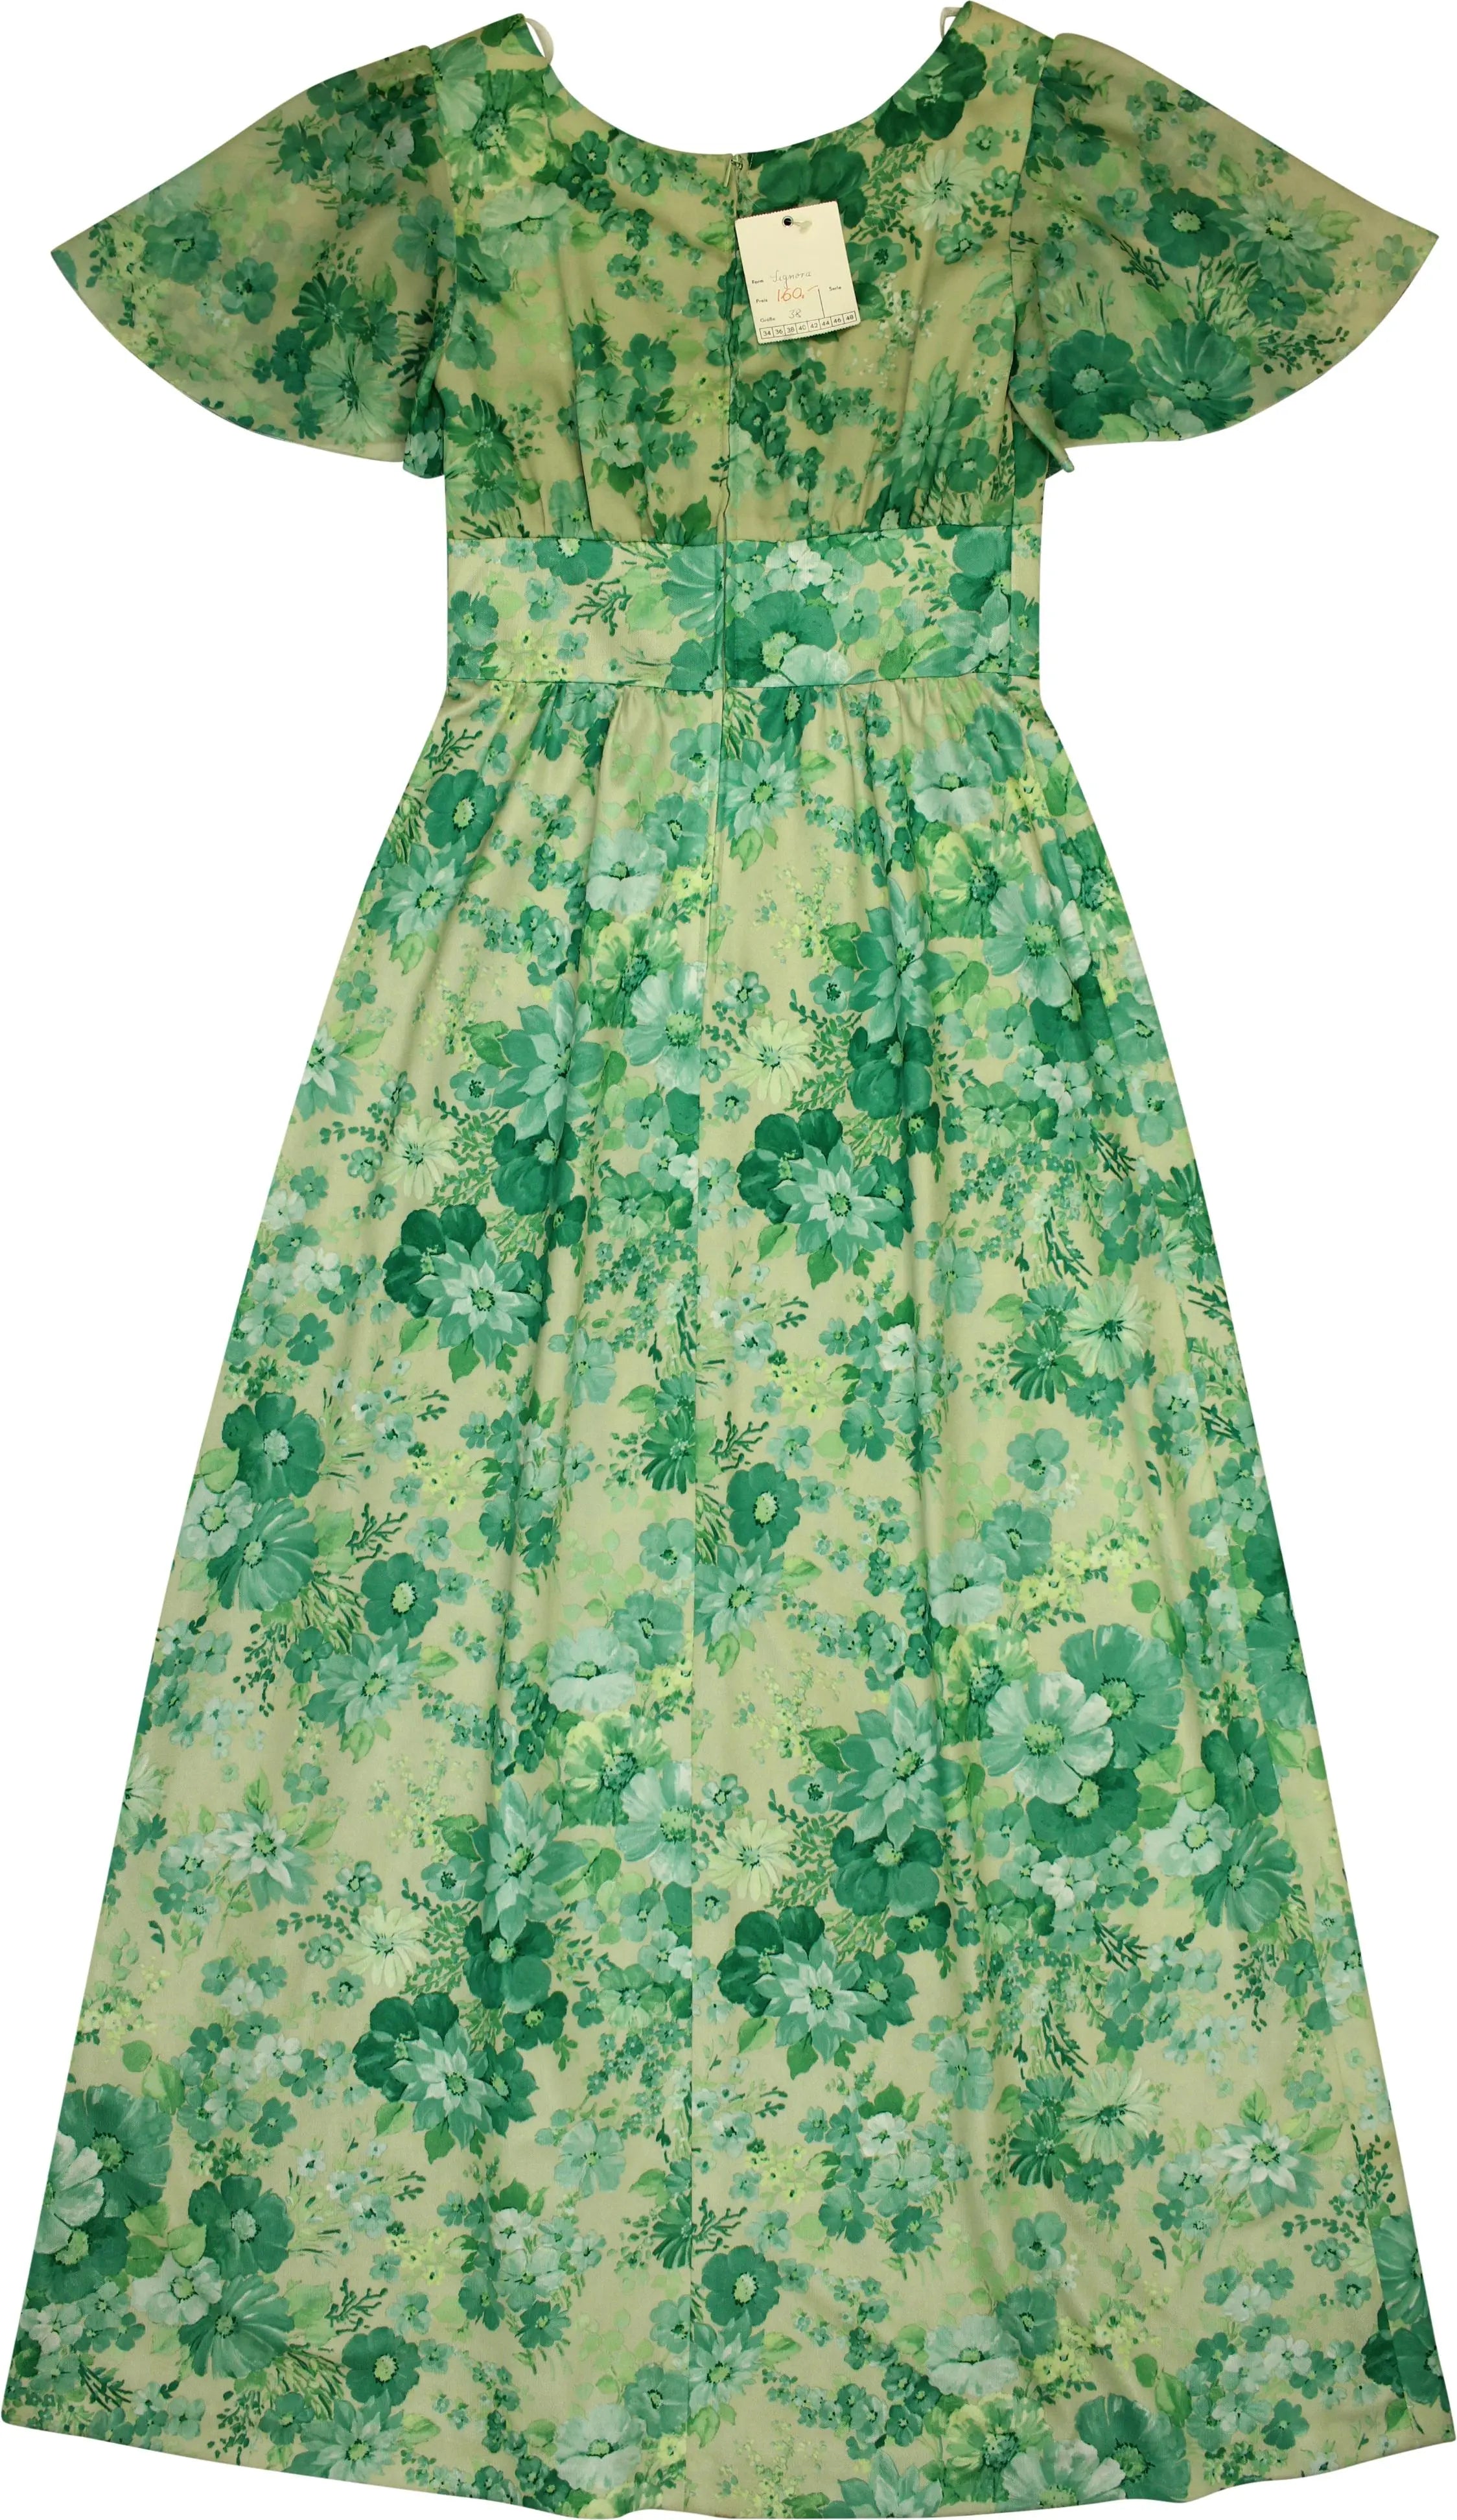 Kleemeier Hof - 70s Floral Dress- ThriftTale.com - Vintage and second handclothing